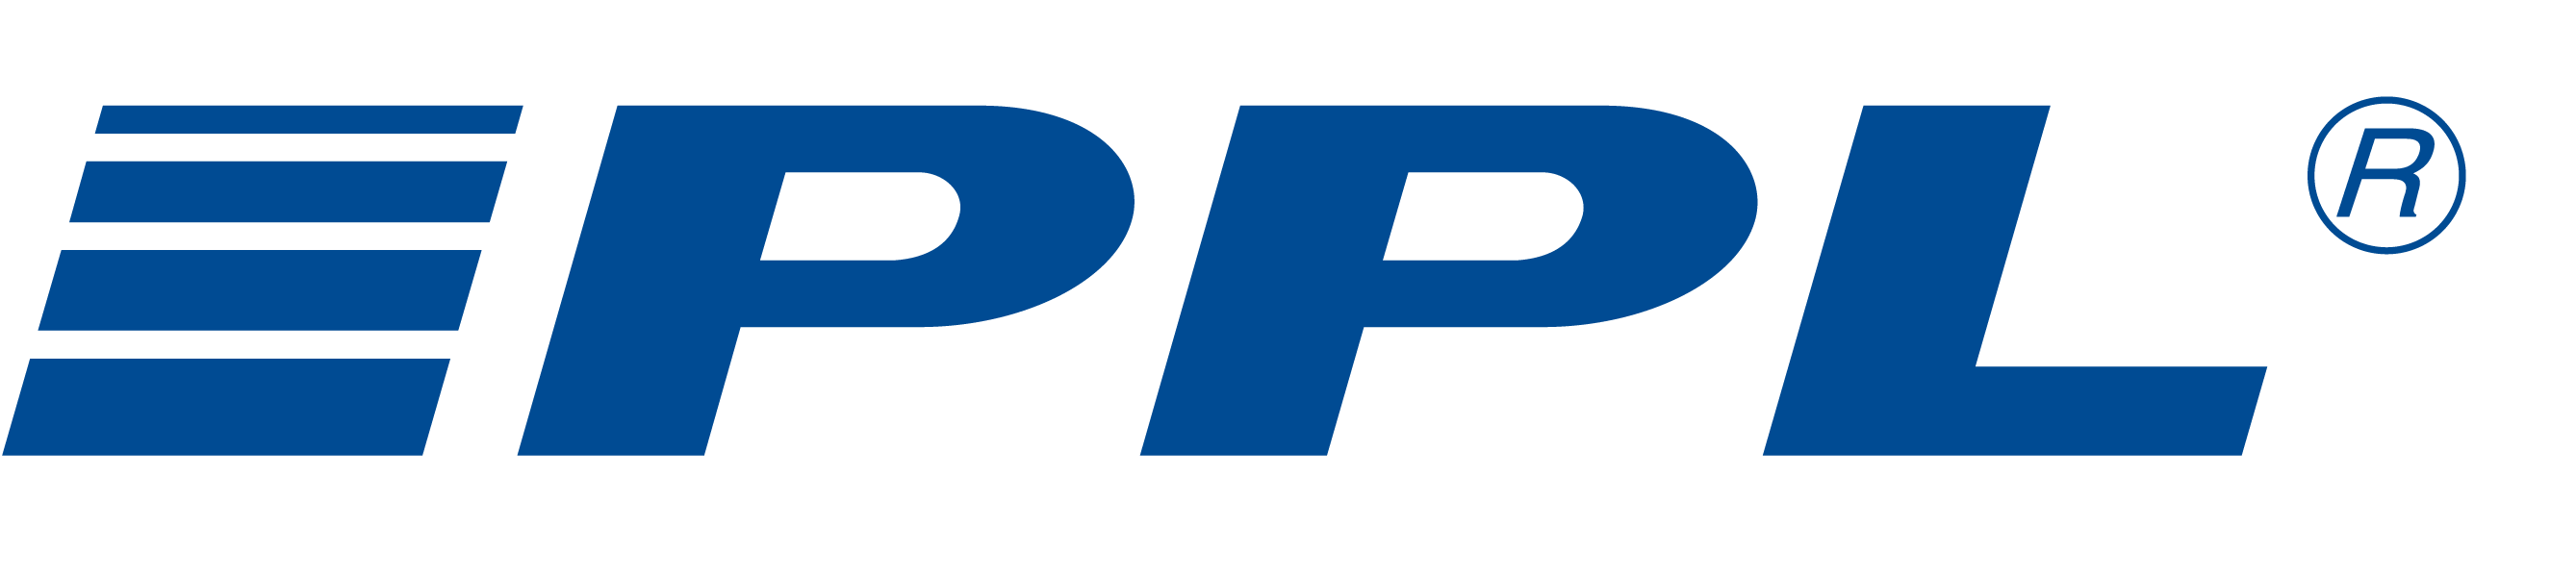 PPL-logo-fixni-vedle-svetlybg-rgb